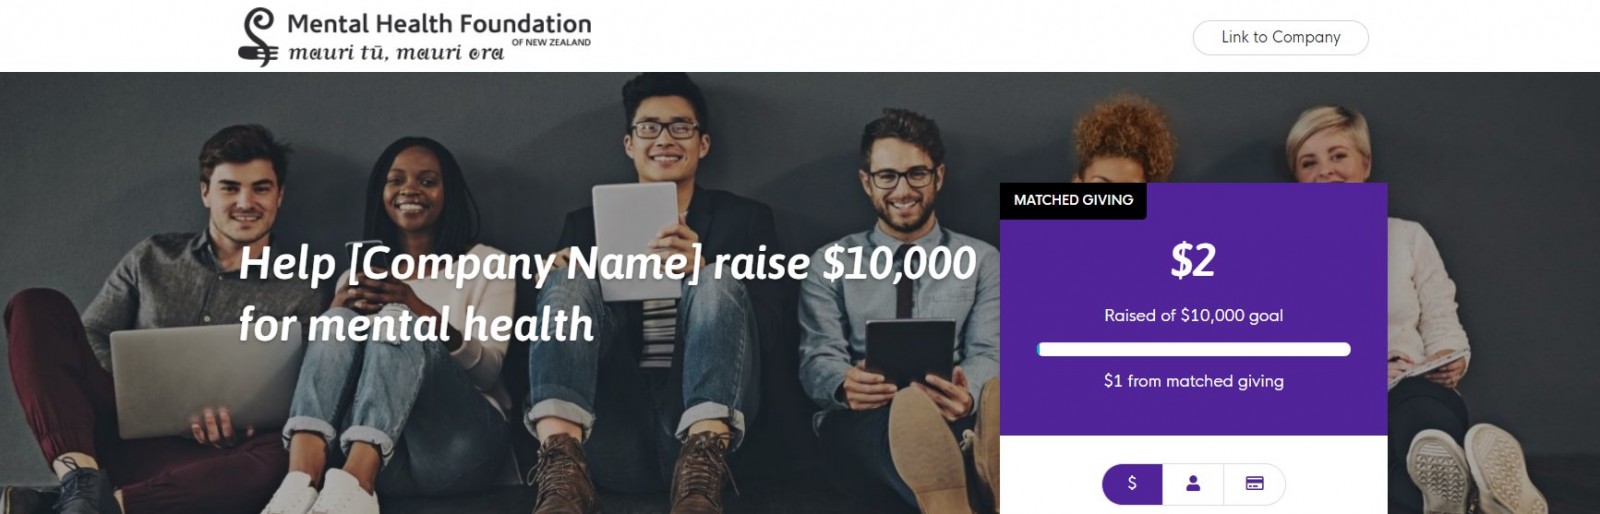 company fundraising matched giving screenshot